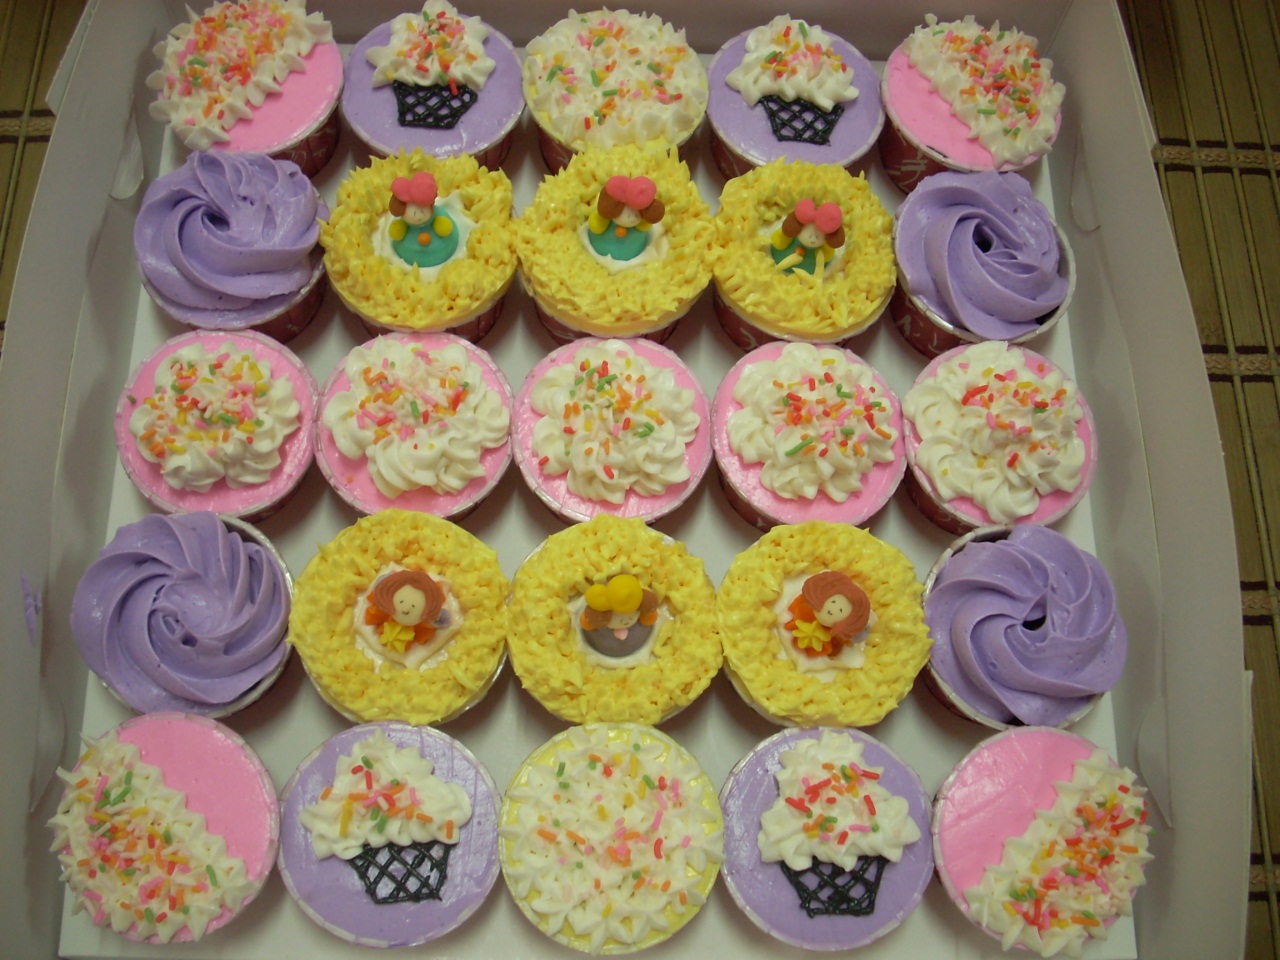 YULIEZ BAKERY: Cupcakes for Kids birthday